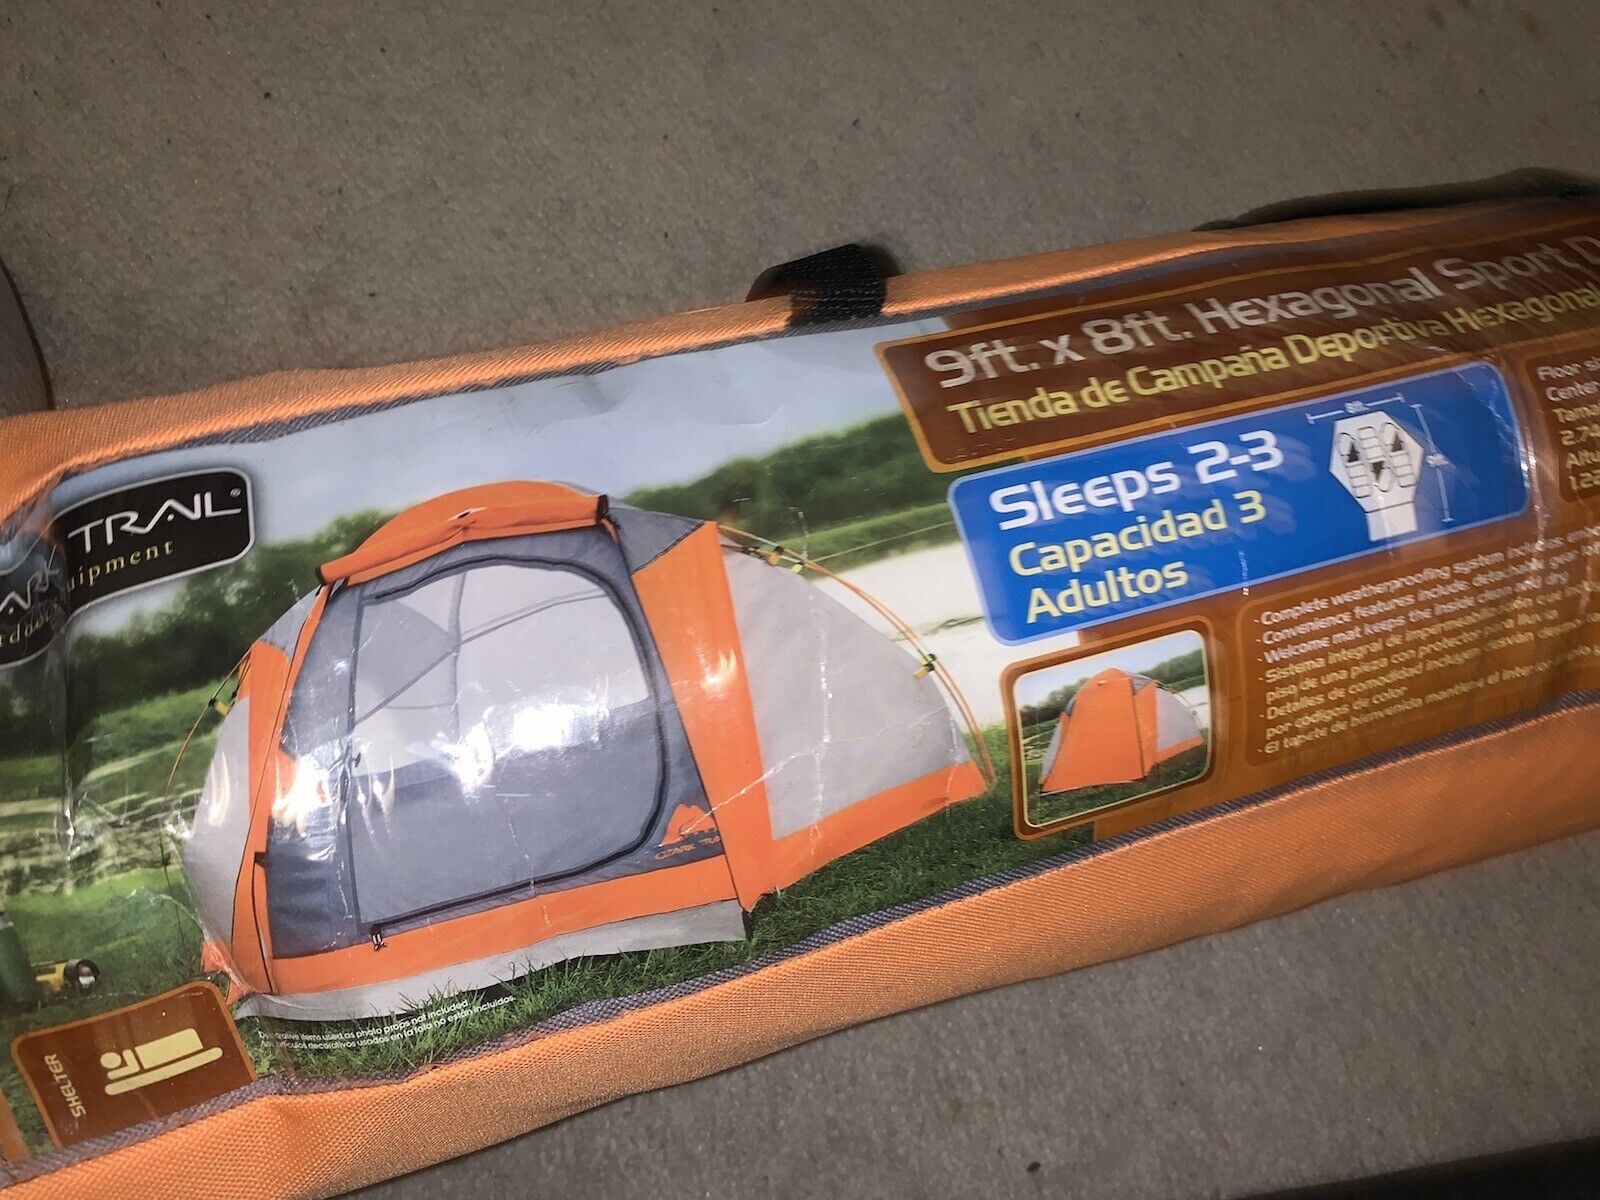 Waterproof  Tent; Sleeps 2-3 Adults